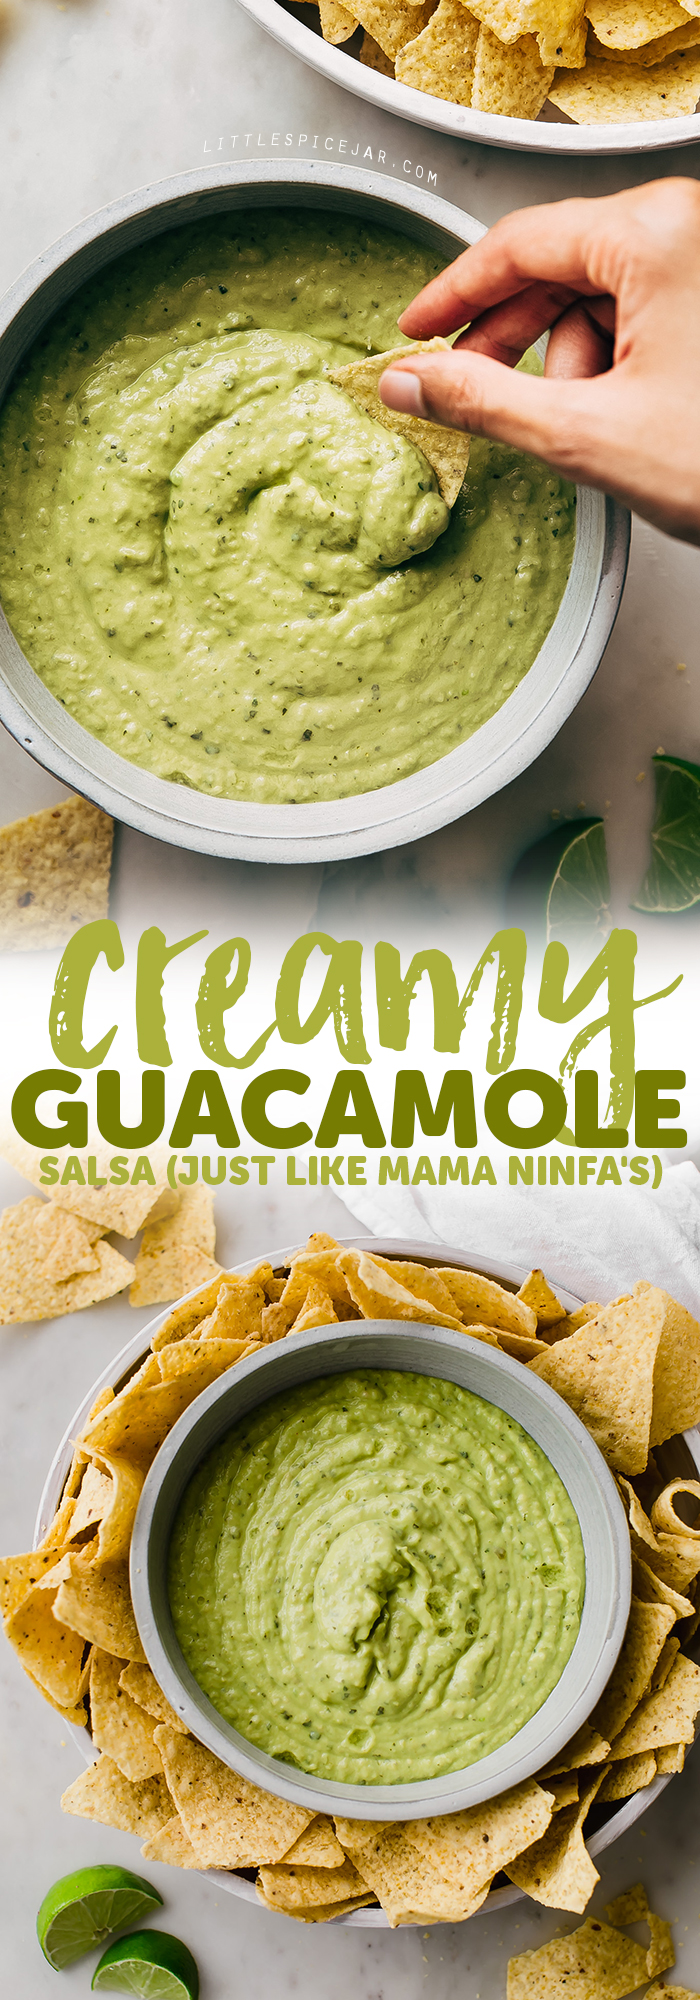 Creamy Guacamole Salsa - An easy avocado dip that tastes just like Mama Ninfa's Green Sauce. Serve with chips or dollop on tacos! #greensauce #mamaninfas #avocadodip #guacamolesalsa | Littlespicejar.com